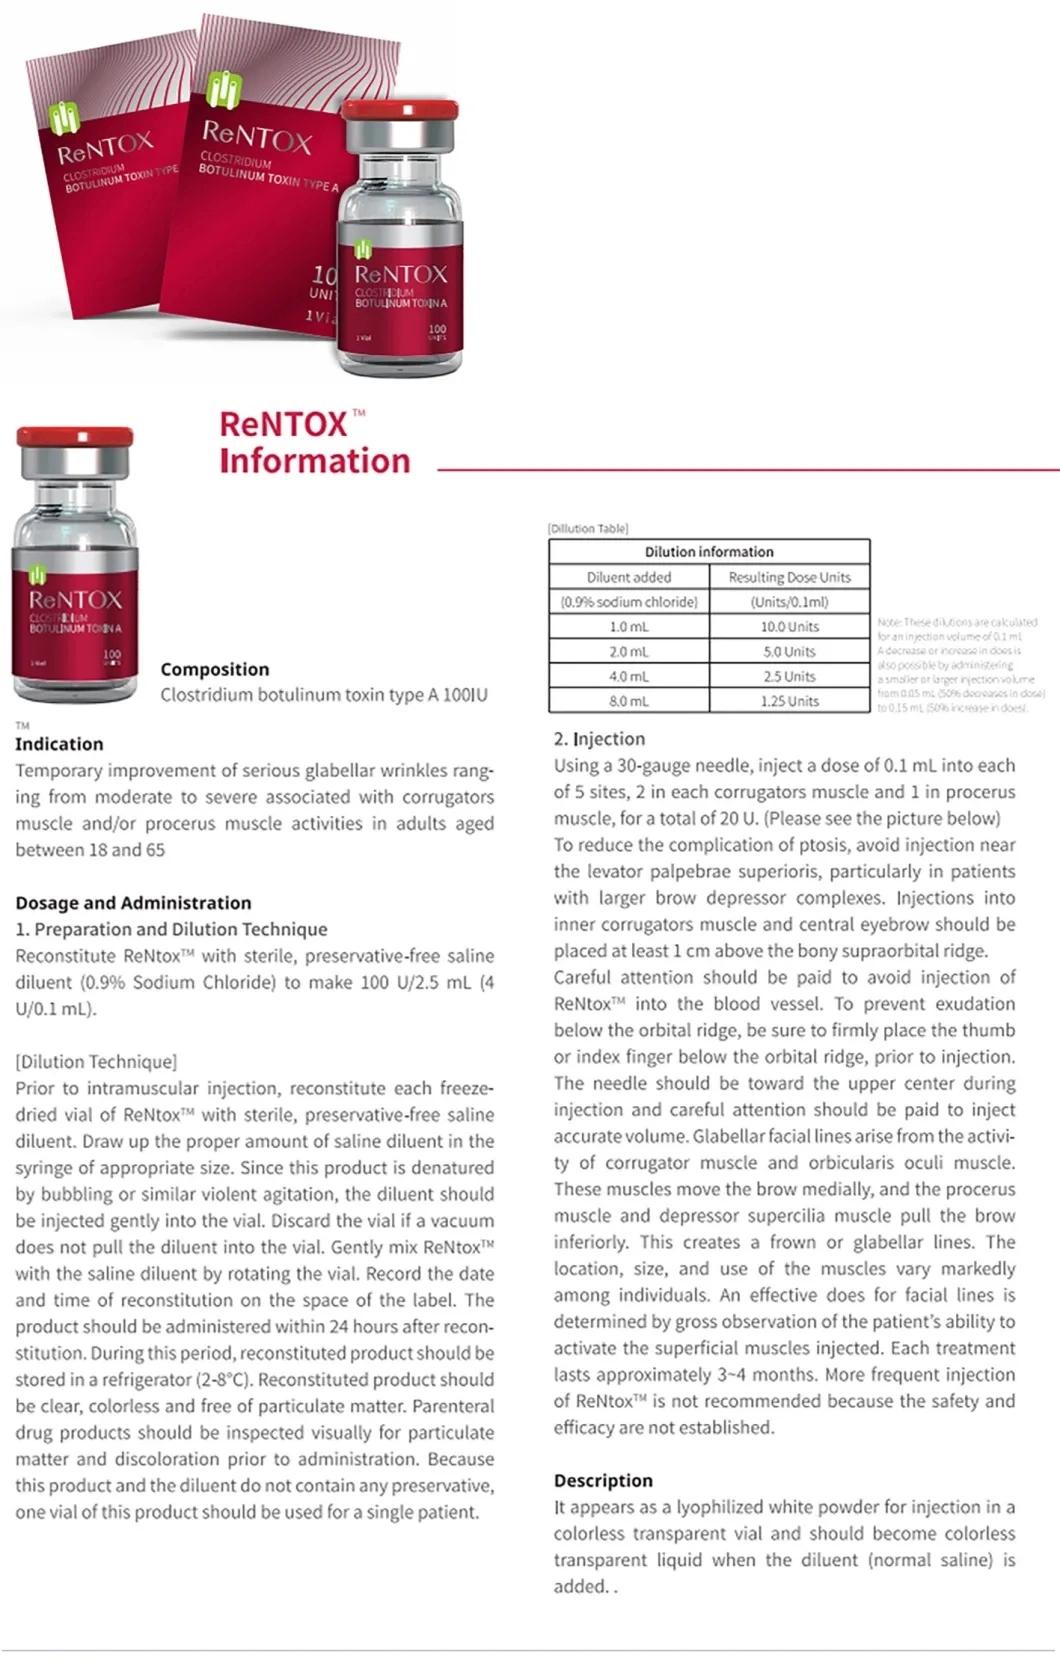 Injectable Korea Top Selling Botulax Meditoxin Innotox Nabota Hutox Novatox Dysport Injection Re N Tox Wrinkles Removal